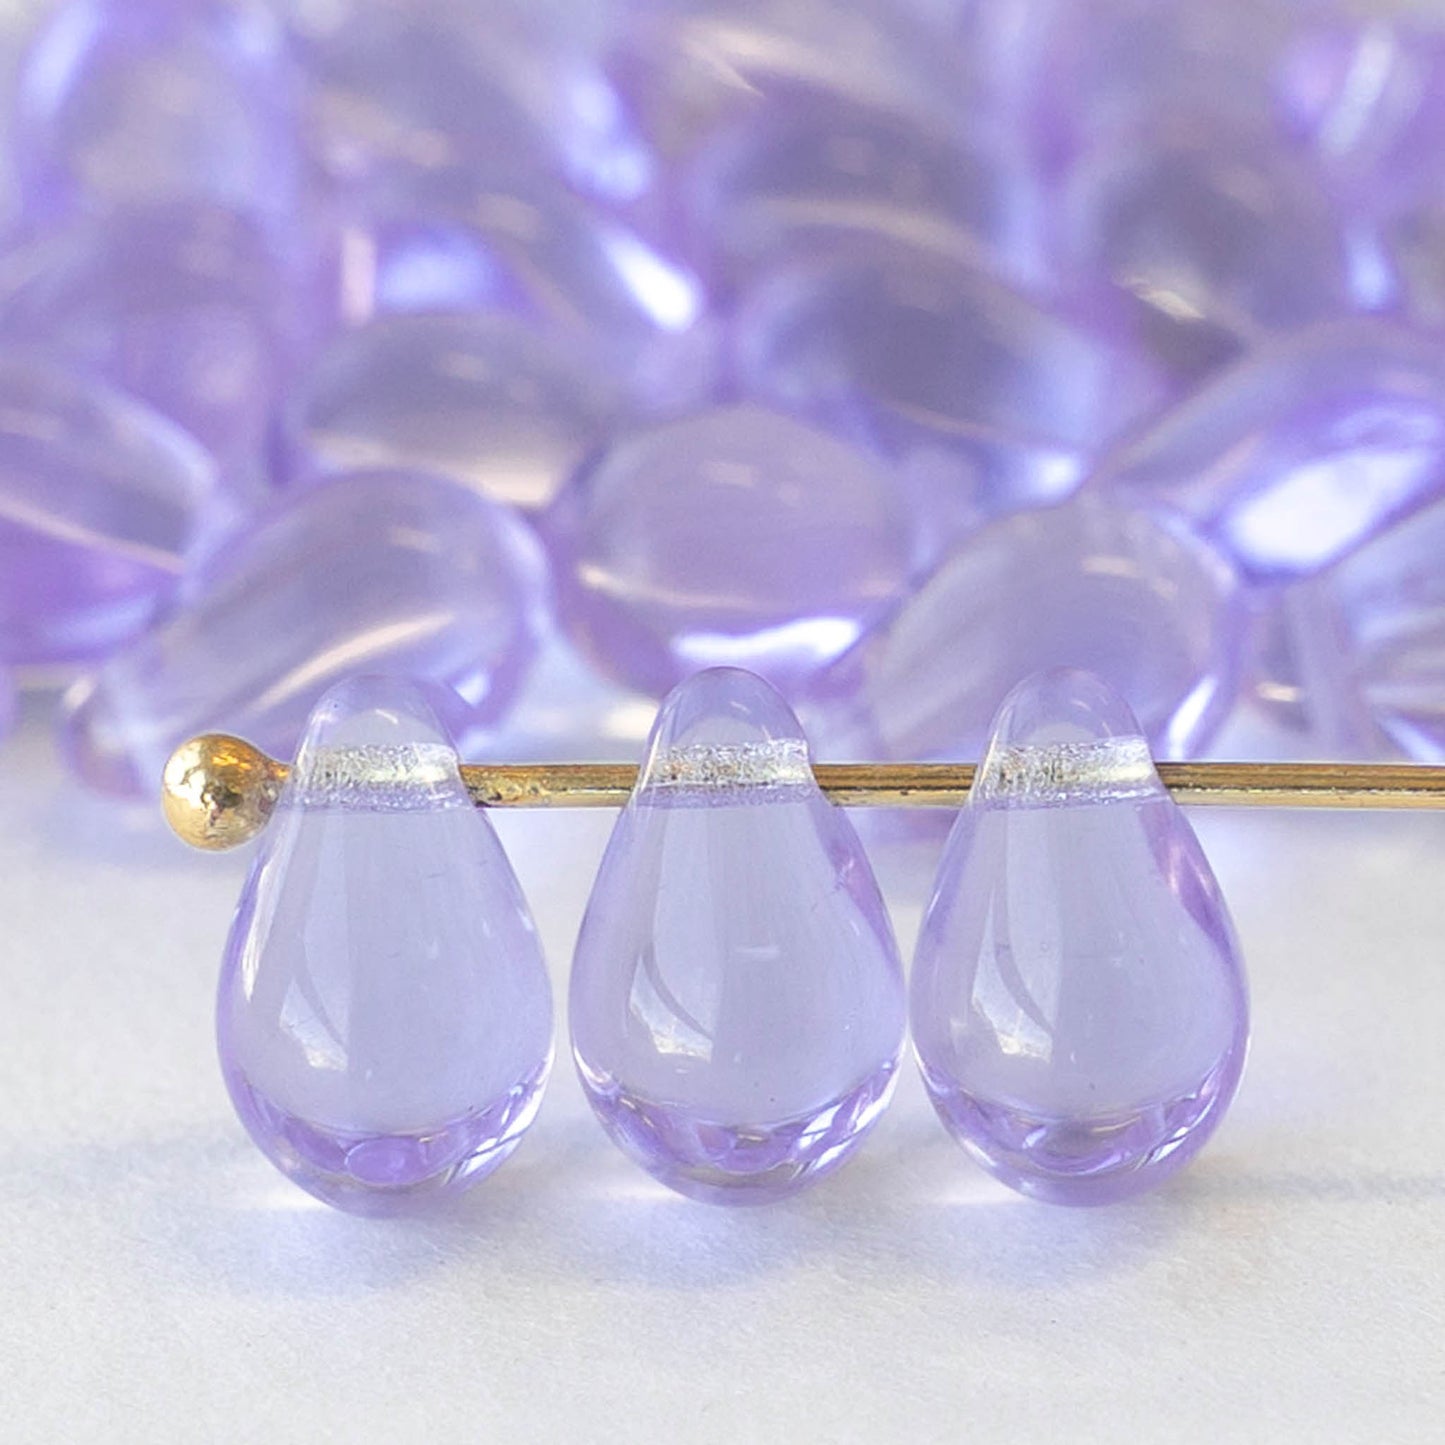 6x9mm Glass Teardrop Beads - Light Transparent Lavender - 50 Beads